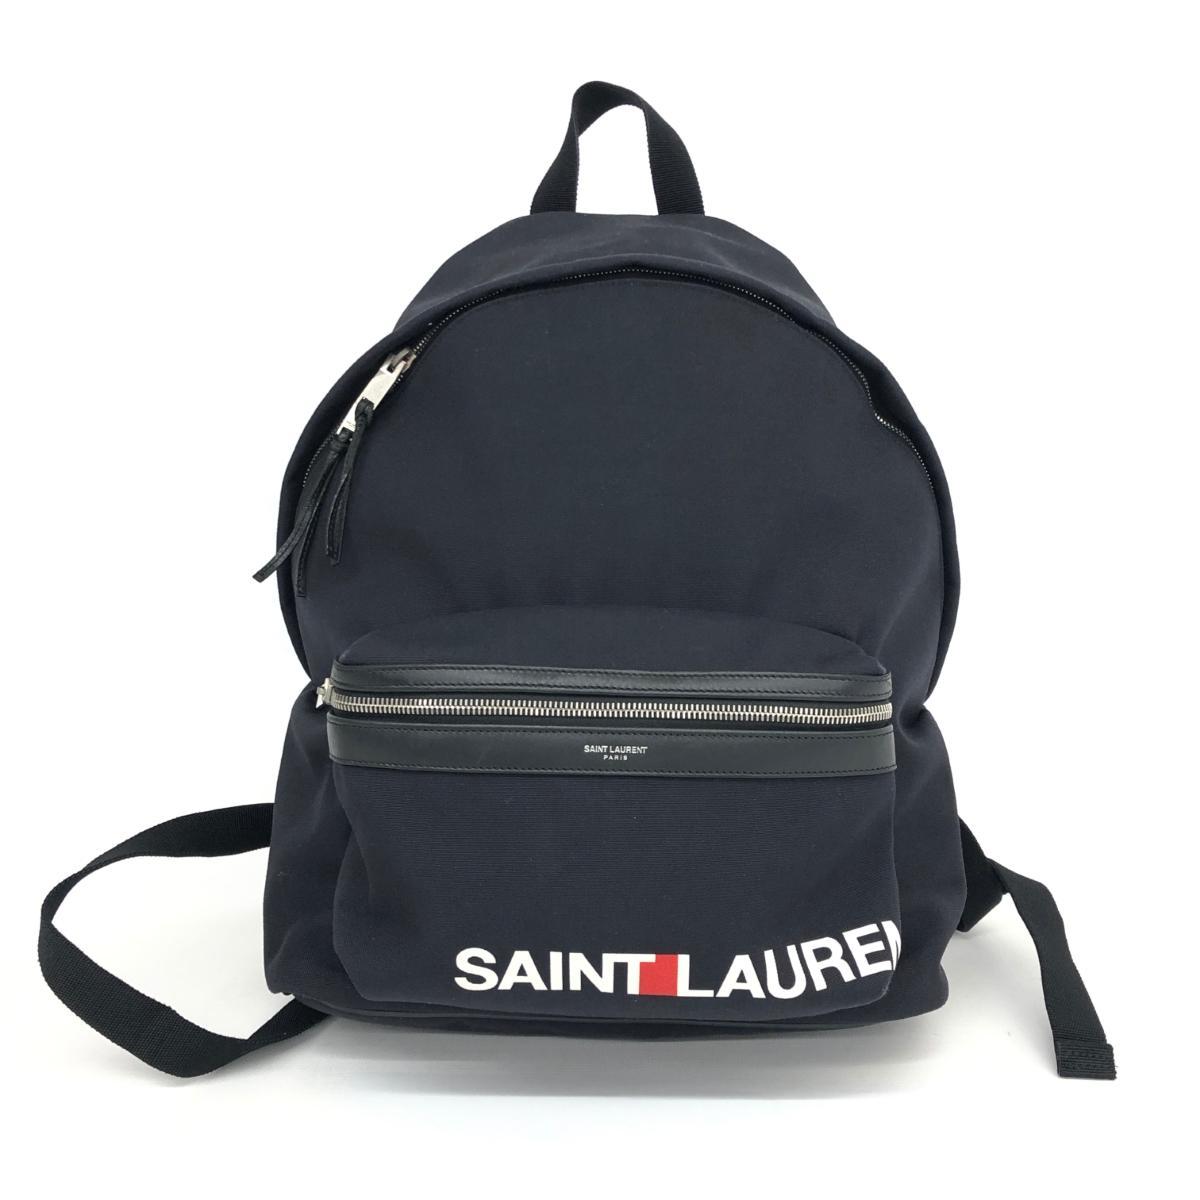 ◆SAINT LAURENT PARIS サンローランパリ リュック◆465448 ブラック ナイロンキャンバス シティ ロゴ ユニセックス バックパック bag 鞄